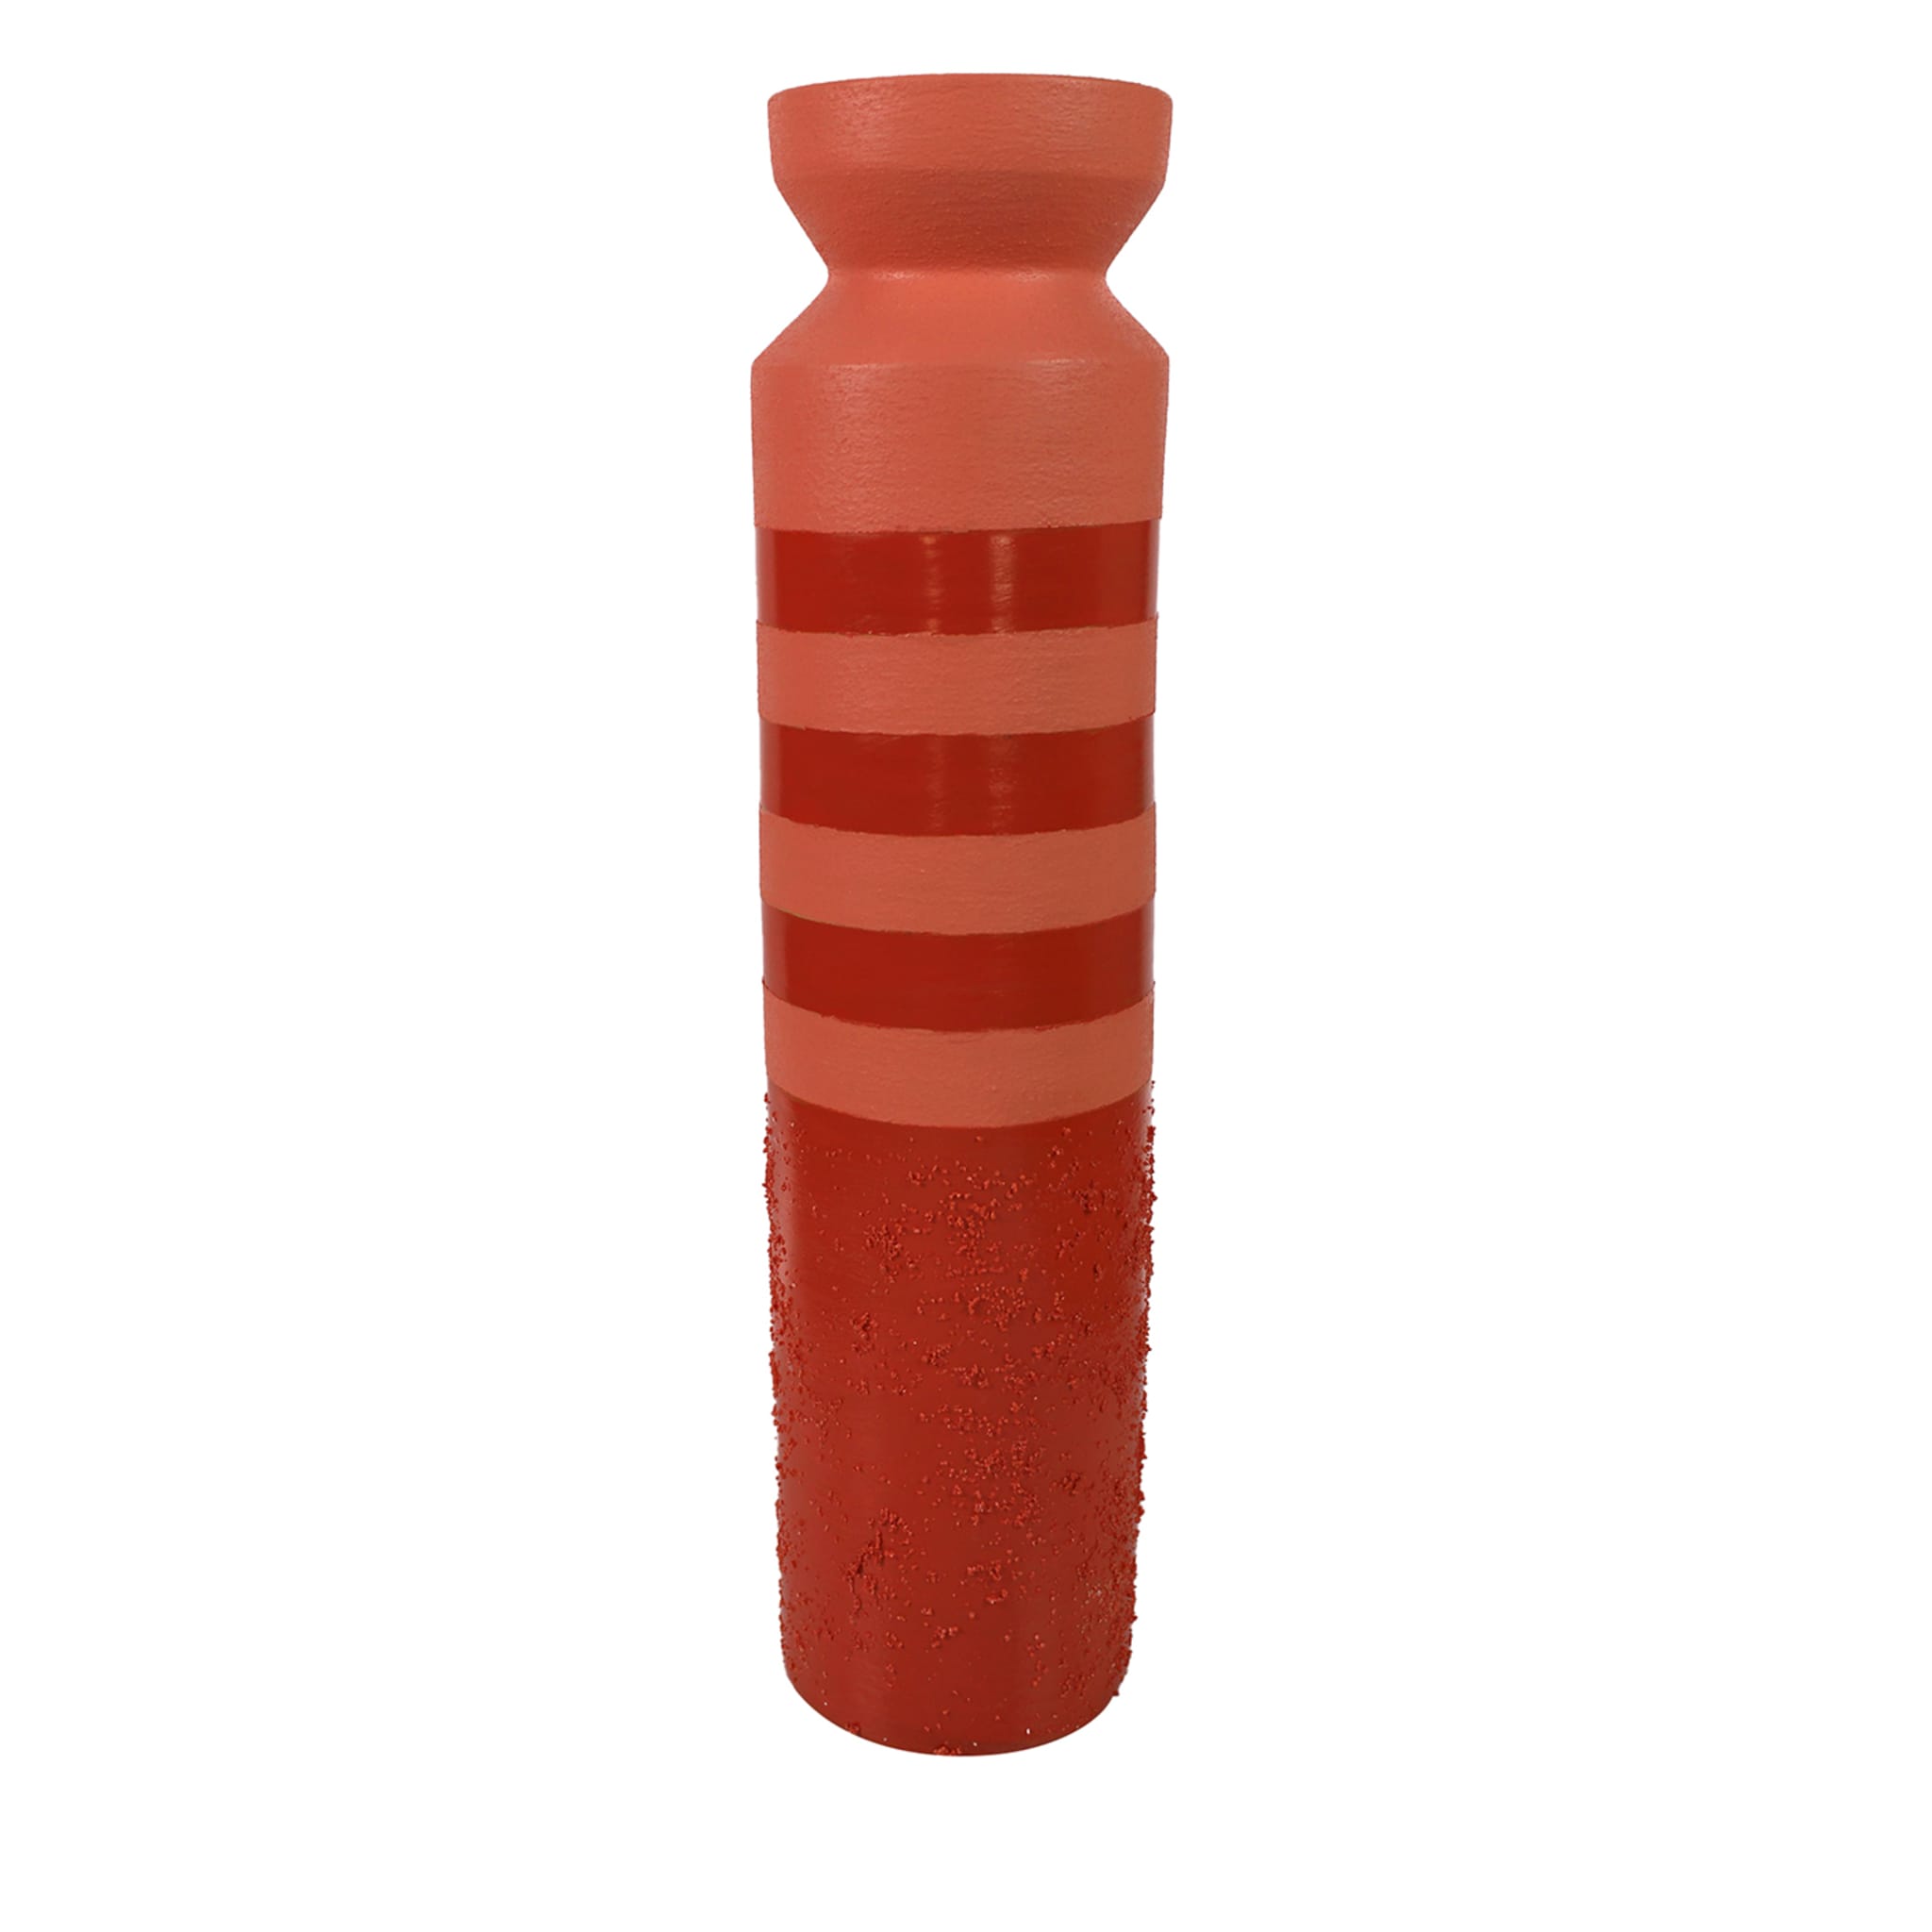 Lineare Vase in Rot und Orange 14 von Mascia Meccani - Hauptansicht